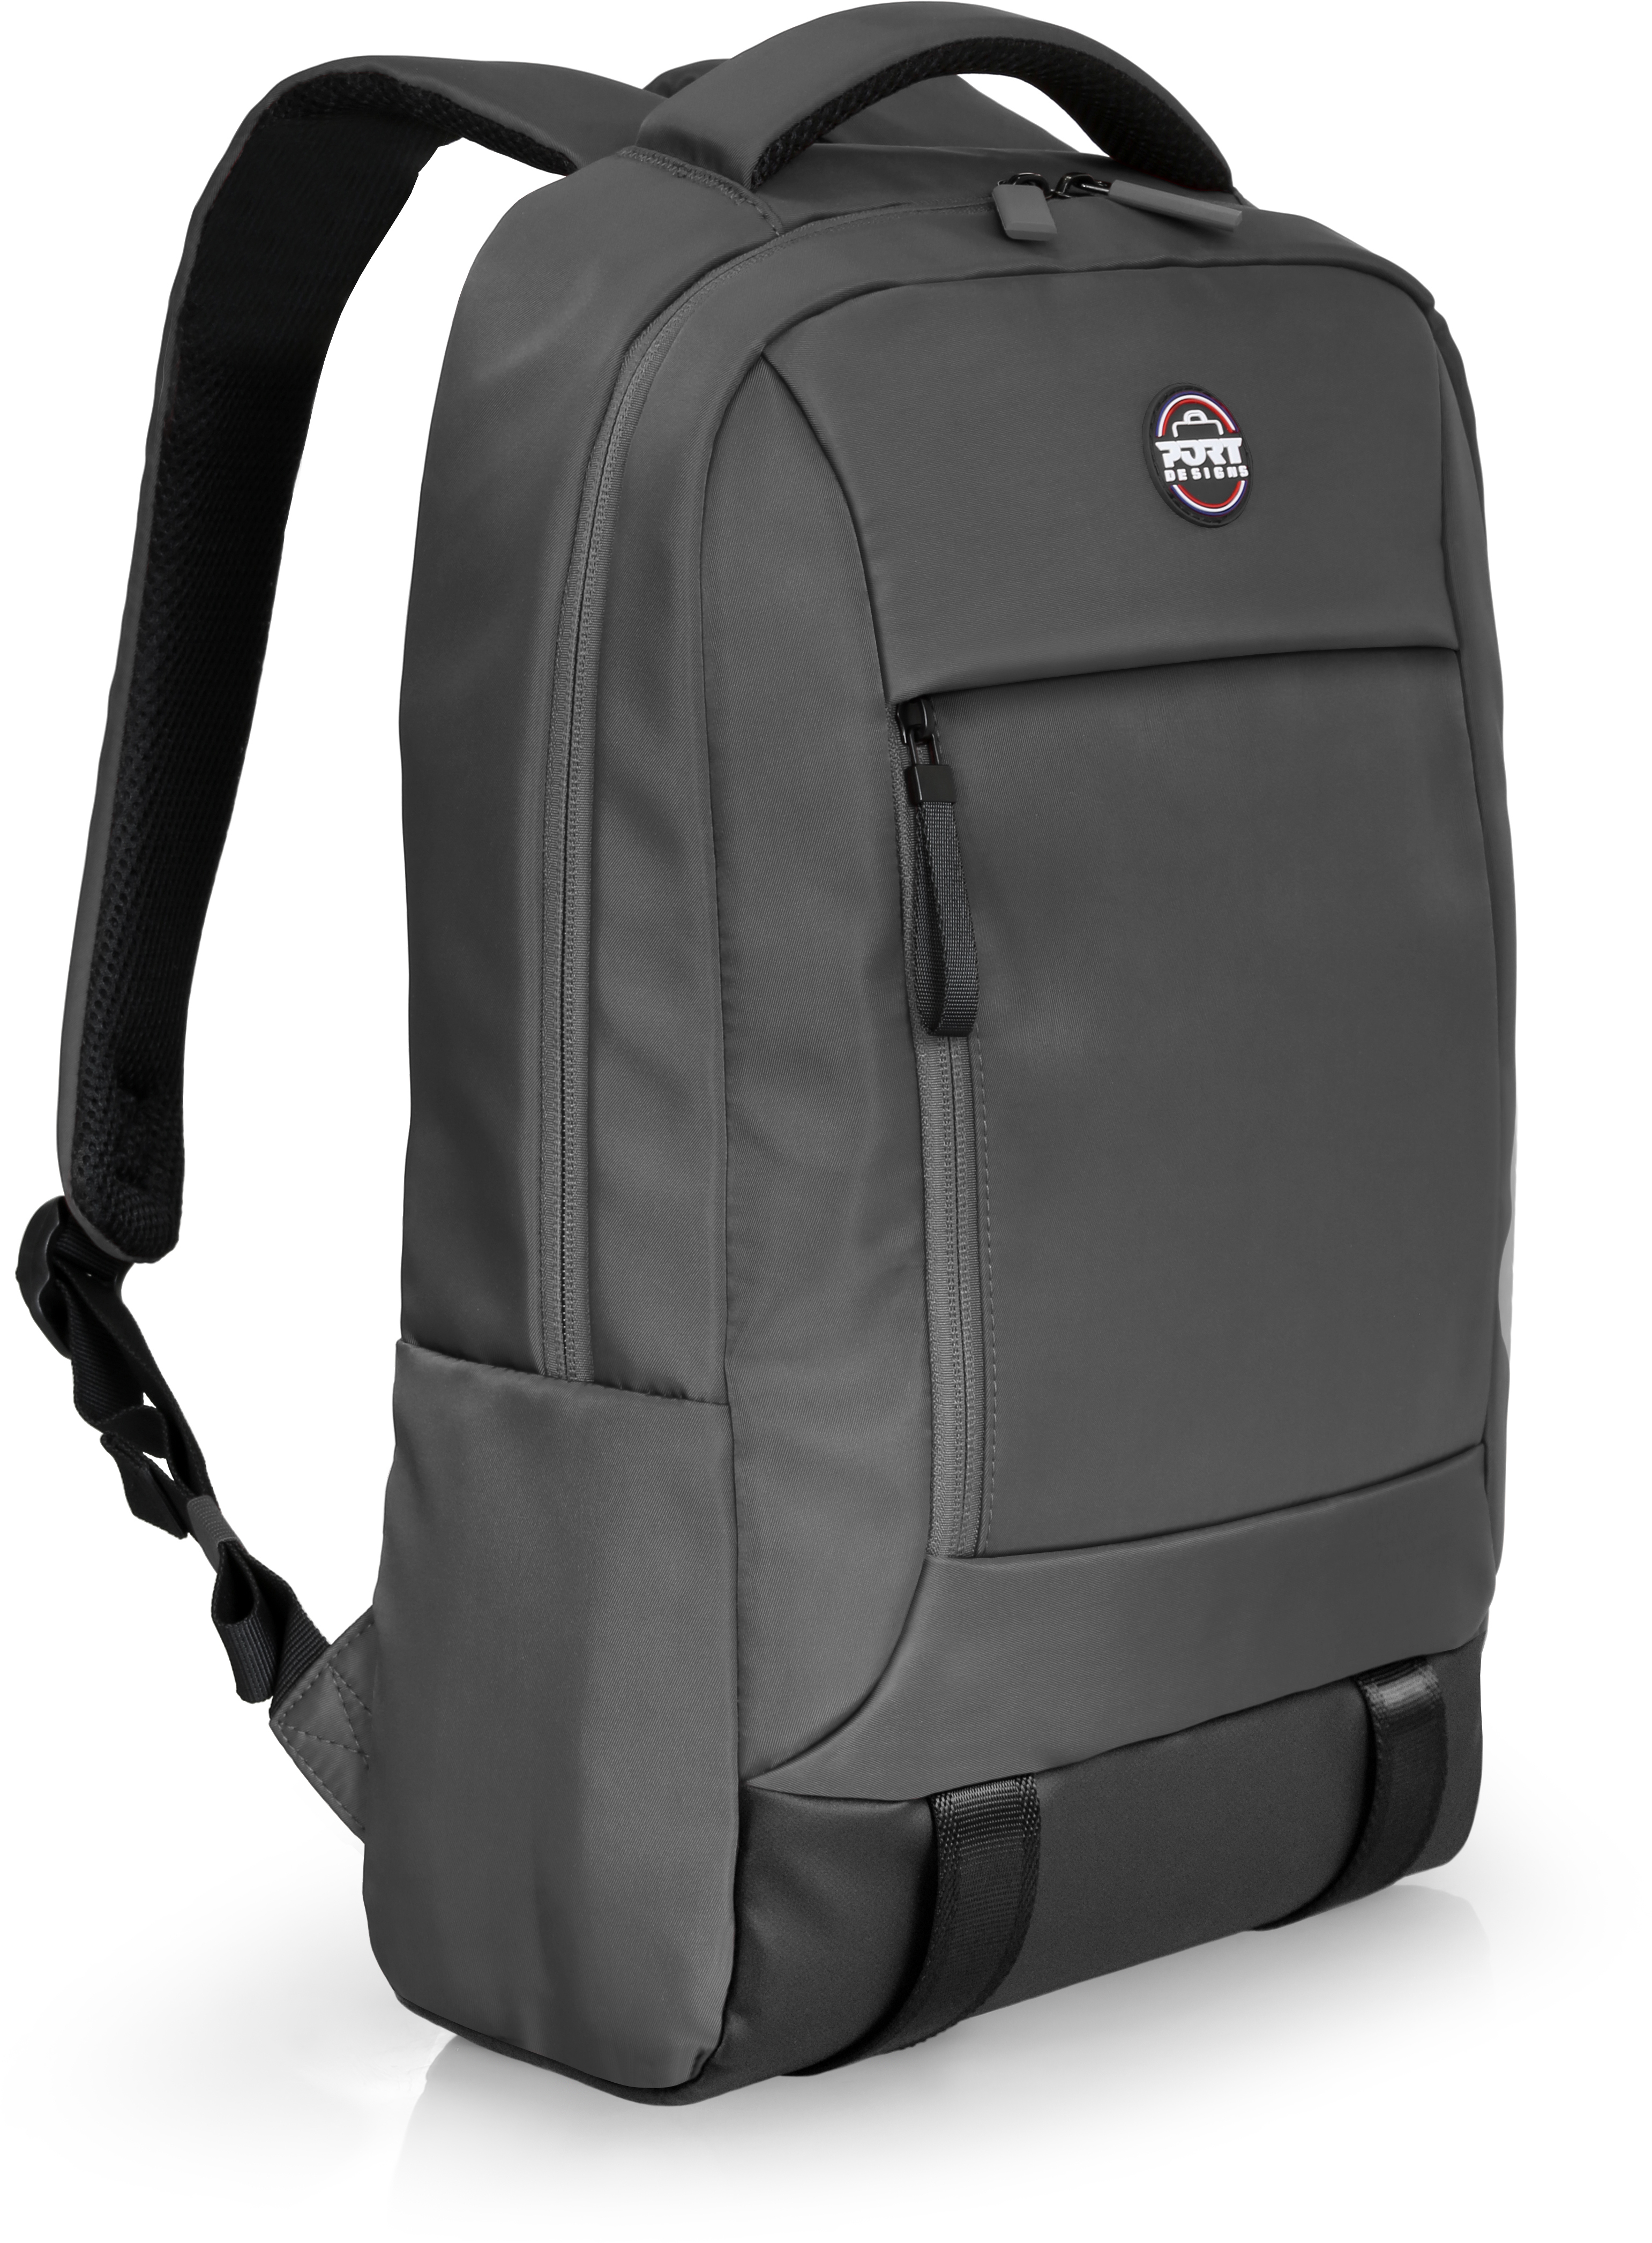 PORT Torino II Backpack 140426 15.6/16 Notebooks, Grey 15.6/16 Notebooks, Grey